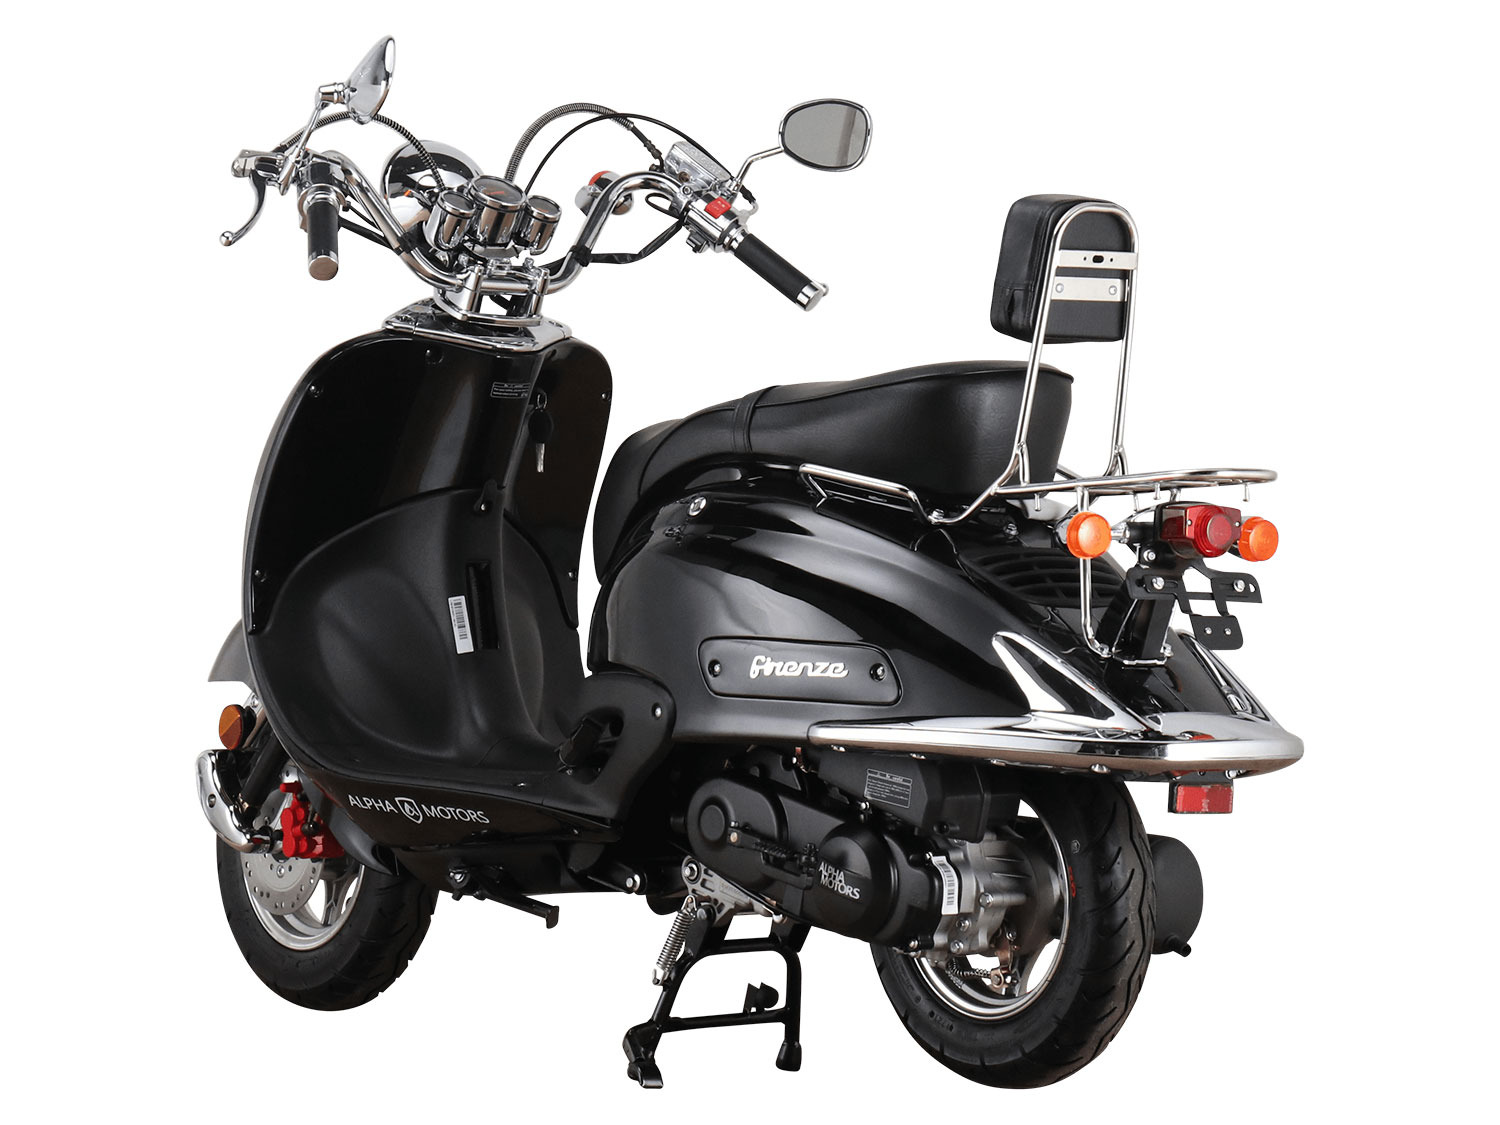 Alpha Motors Motorroller Firenze 125 ccm EURO 5 | LIDL | Motorroller